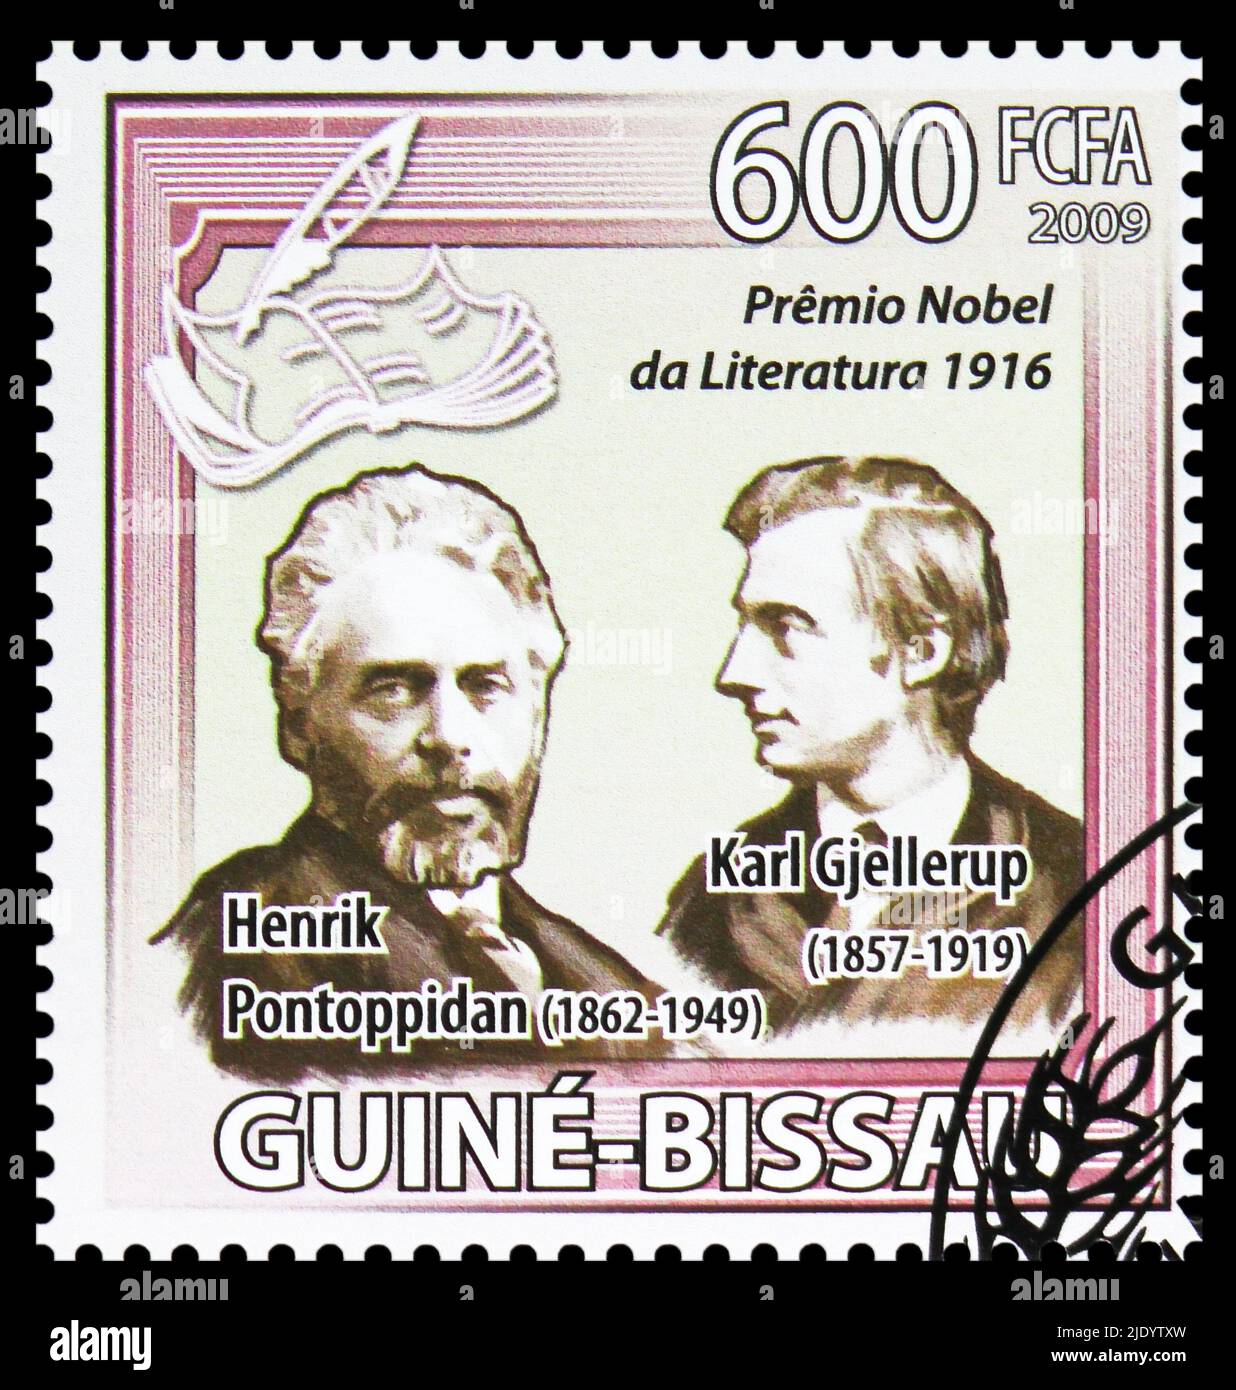 MOSCOW, RUSSIA - JUNE 17, 2022: Postage stamp printed in Guinea-Bissau shows Henrik Pontoppidan and Karl Gjellerup, Nobel Prize serie, circa 2009 Stock Photo